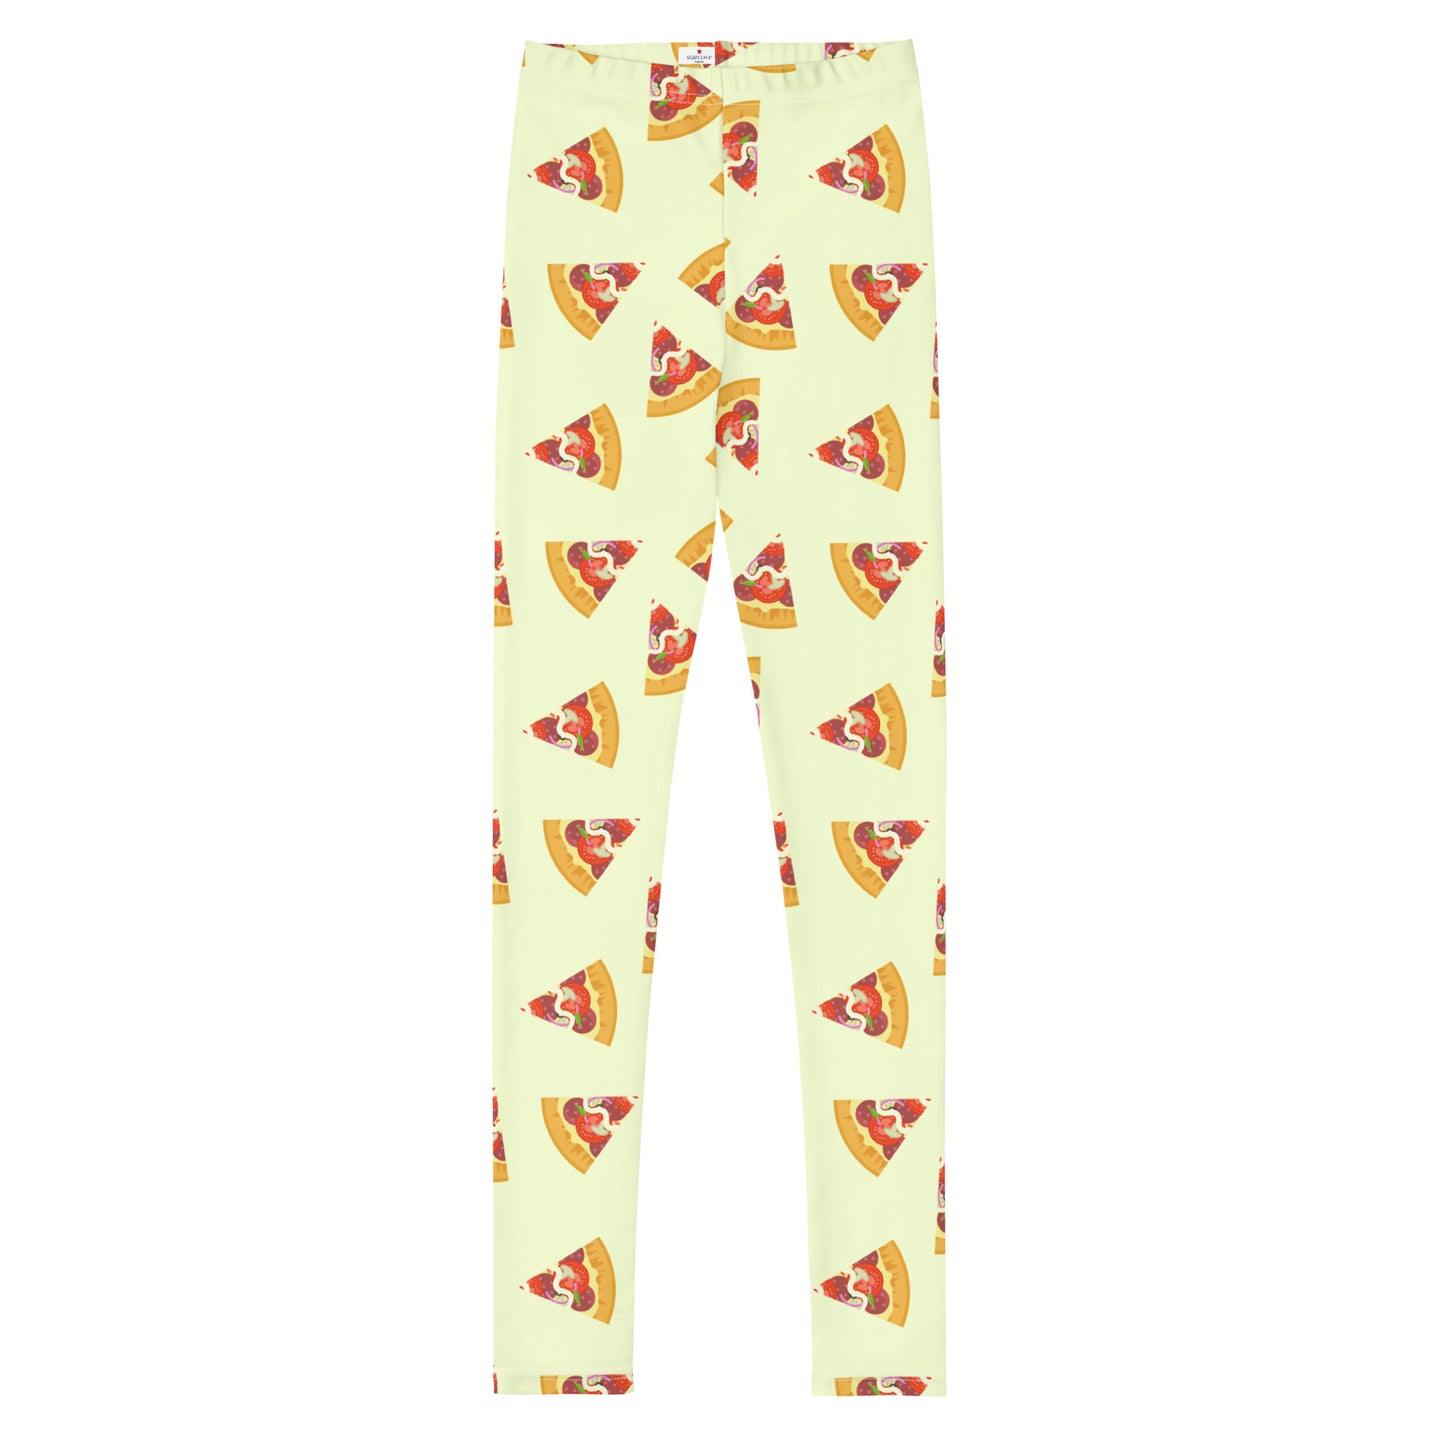 Pizza Slices Girls Leggings (8-20), Food Youth Teen Cute Printed Kids Yoga Pants Graphic Print Fun Tights Tween